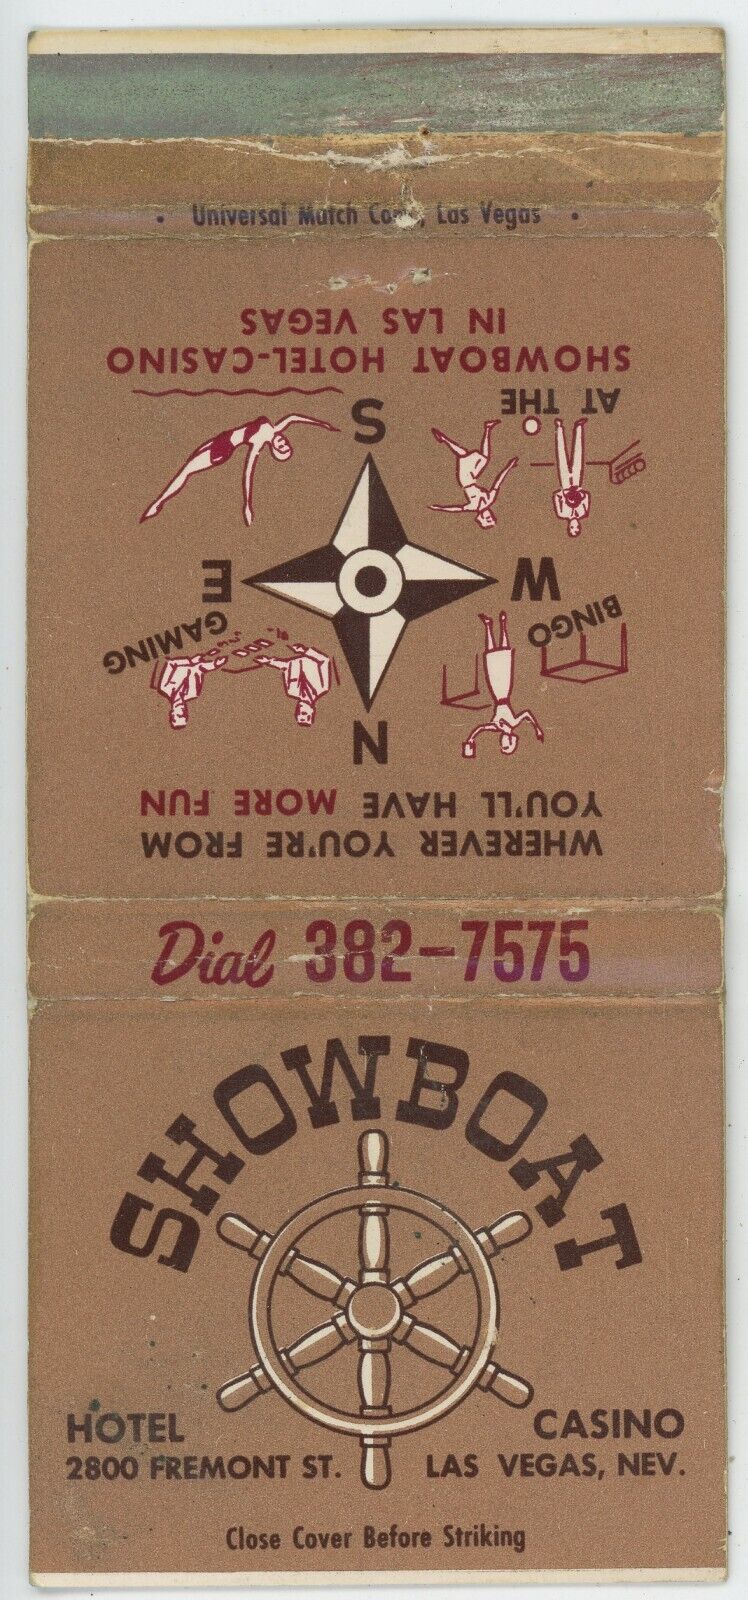 Showboat Hotel Casino 2800 FREMONT ST. LAS VEGAS, NV Antique Matchbook Cover D-6